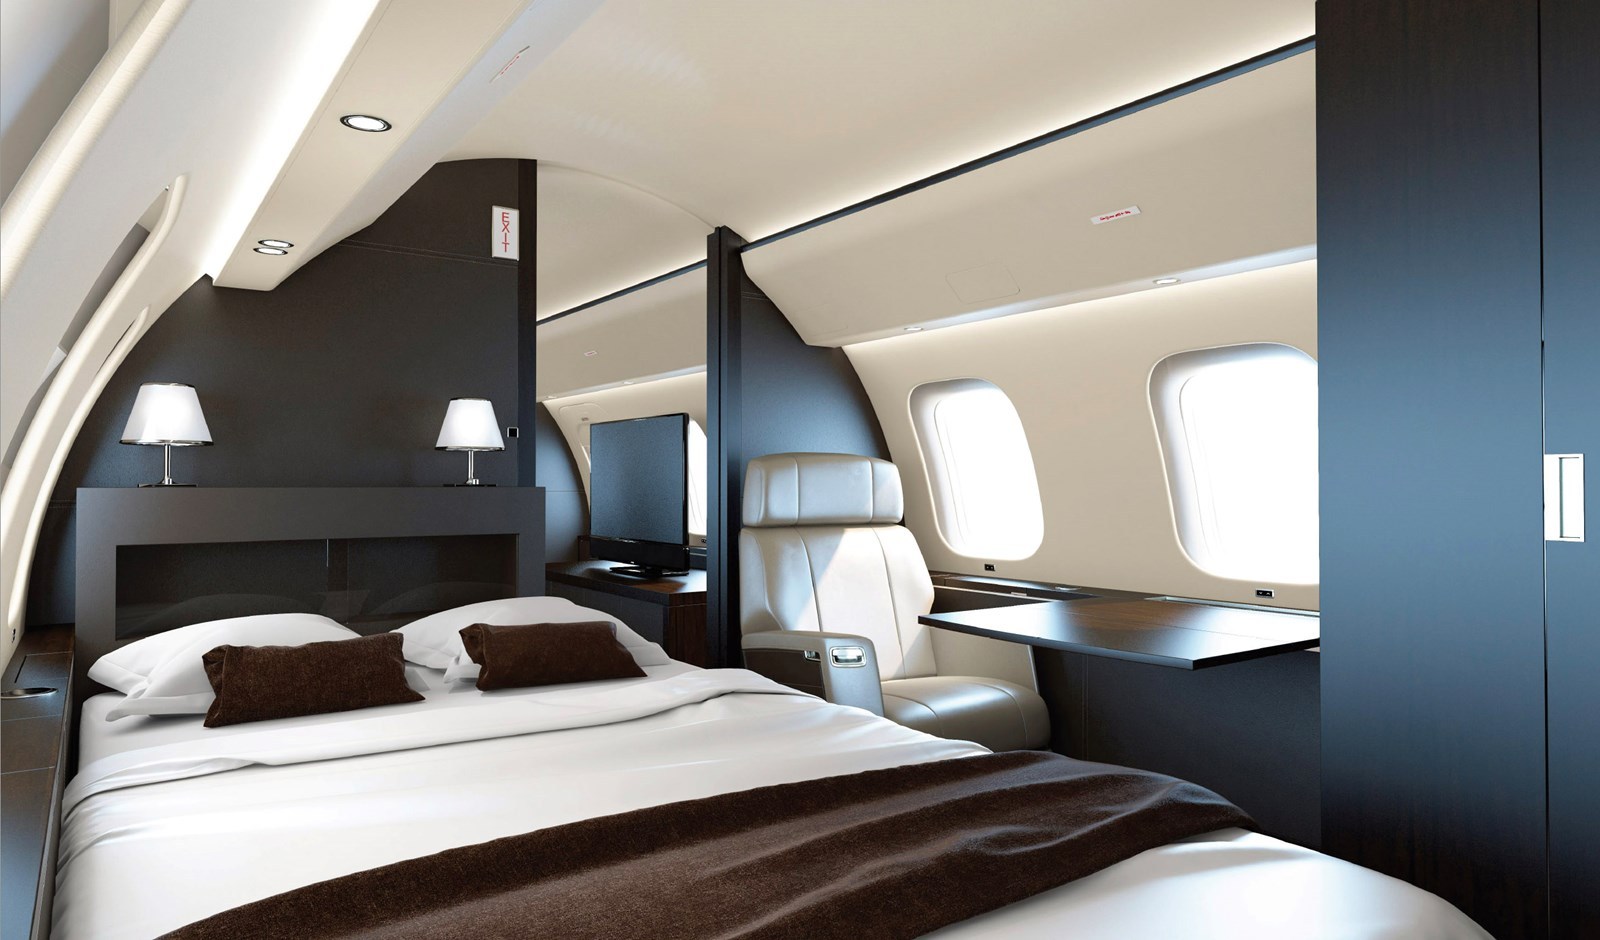 Bombardier Global 7500 Interior